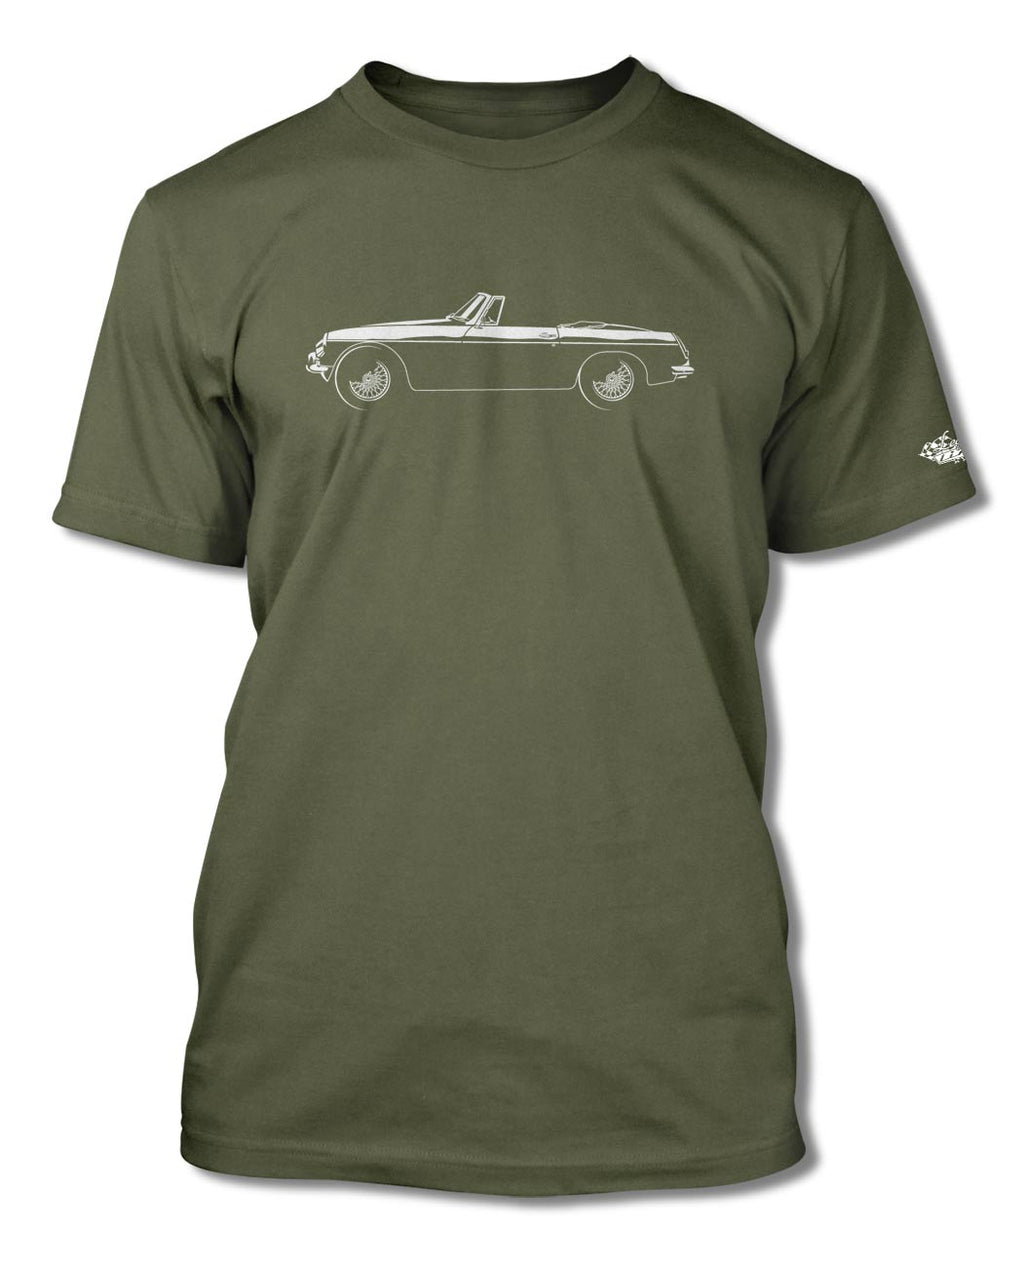 MG MGB Convertible T-Shirt - Men - Side View